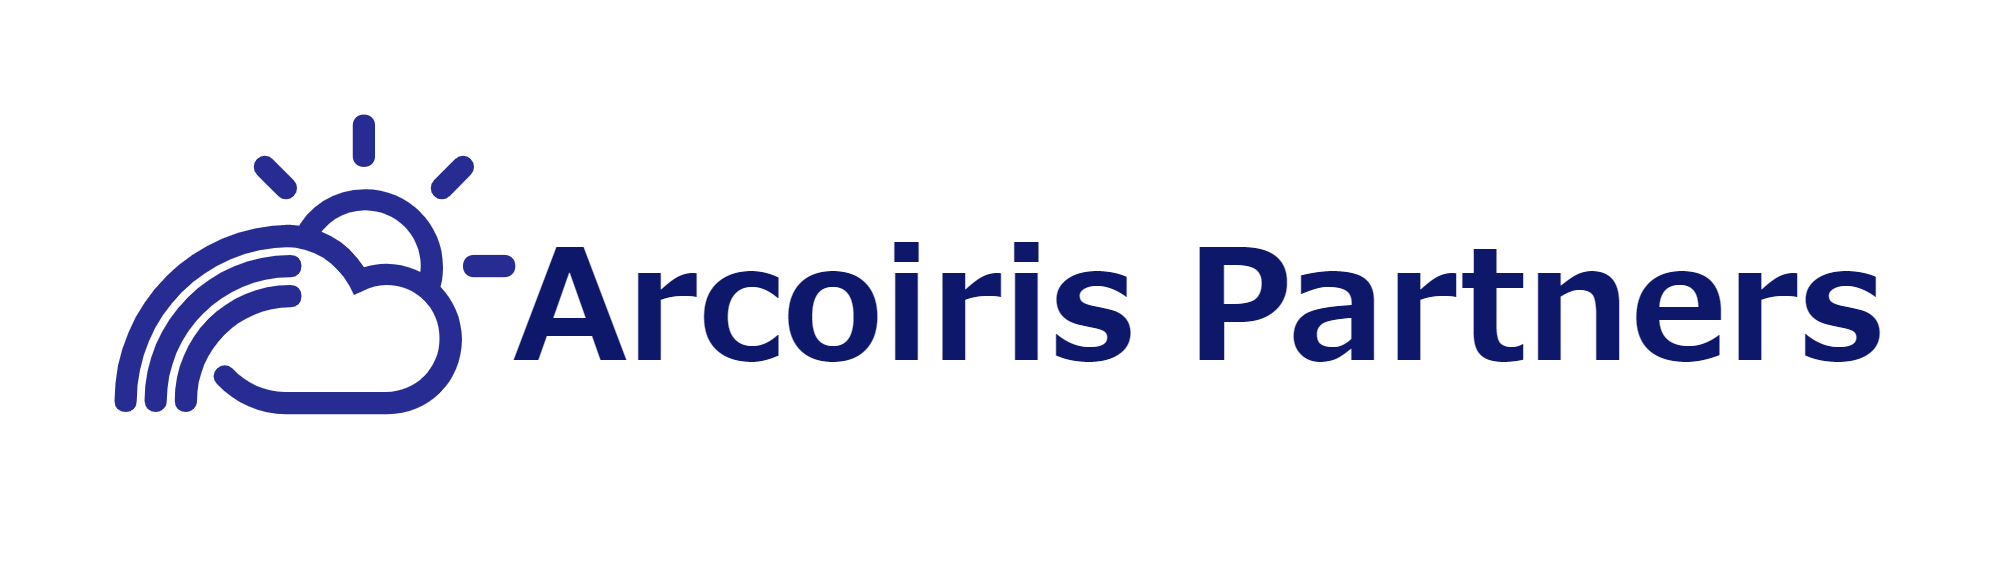 Arcoiris Partners